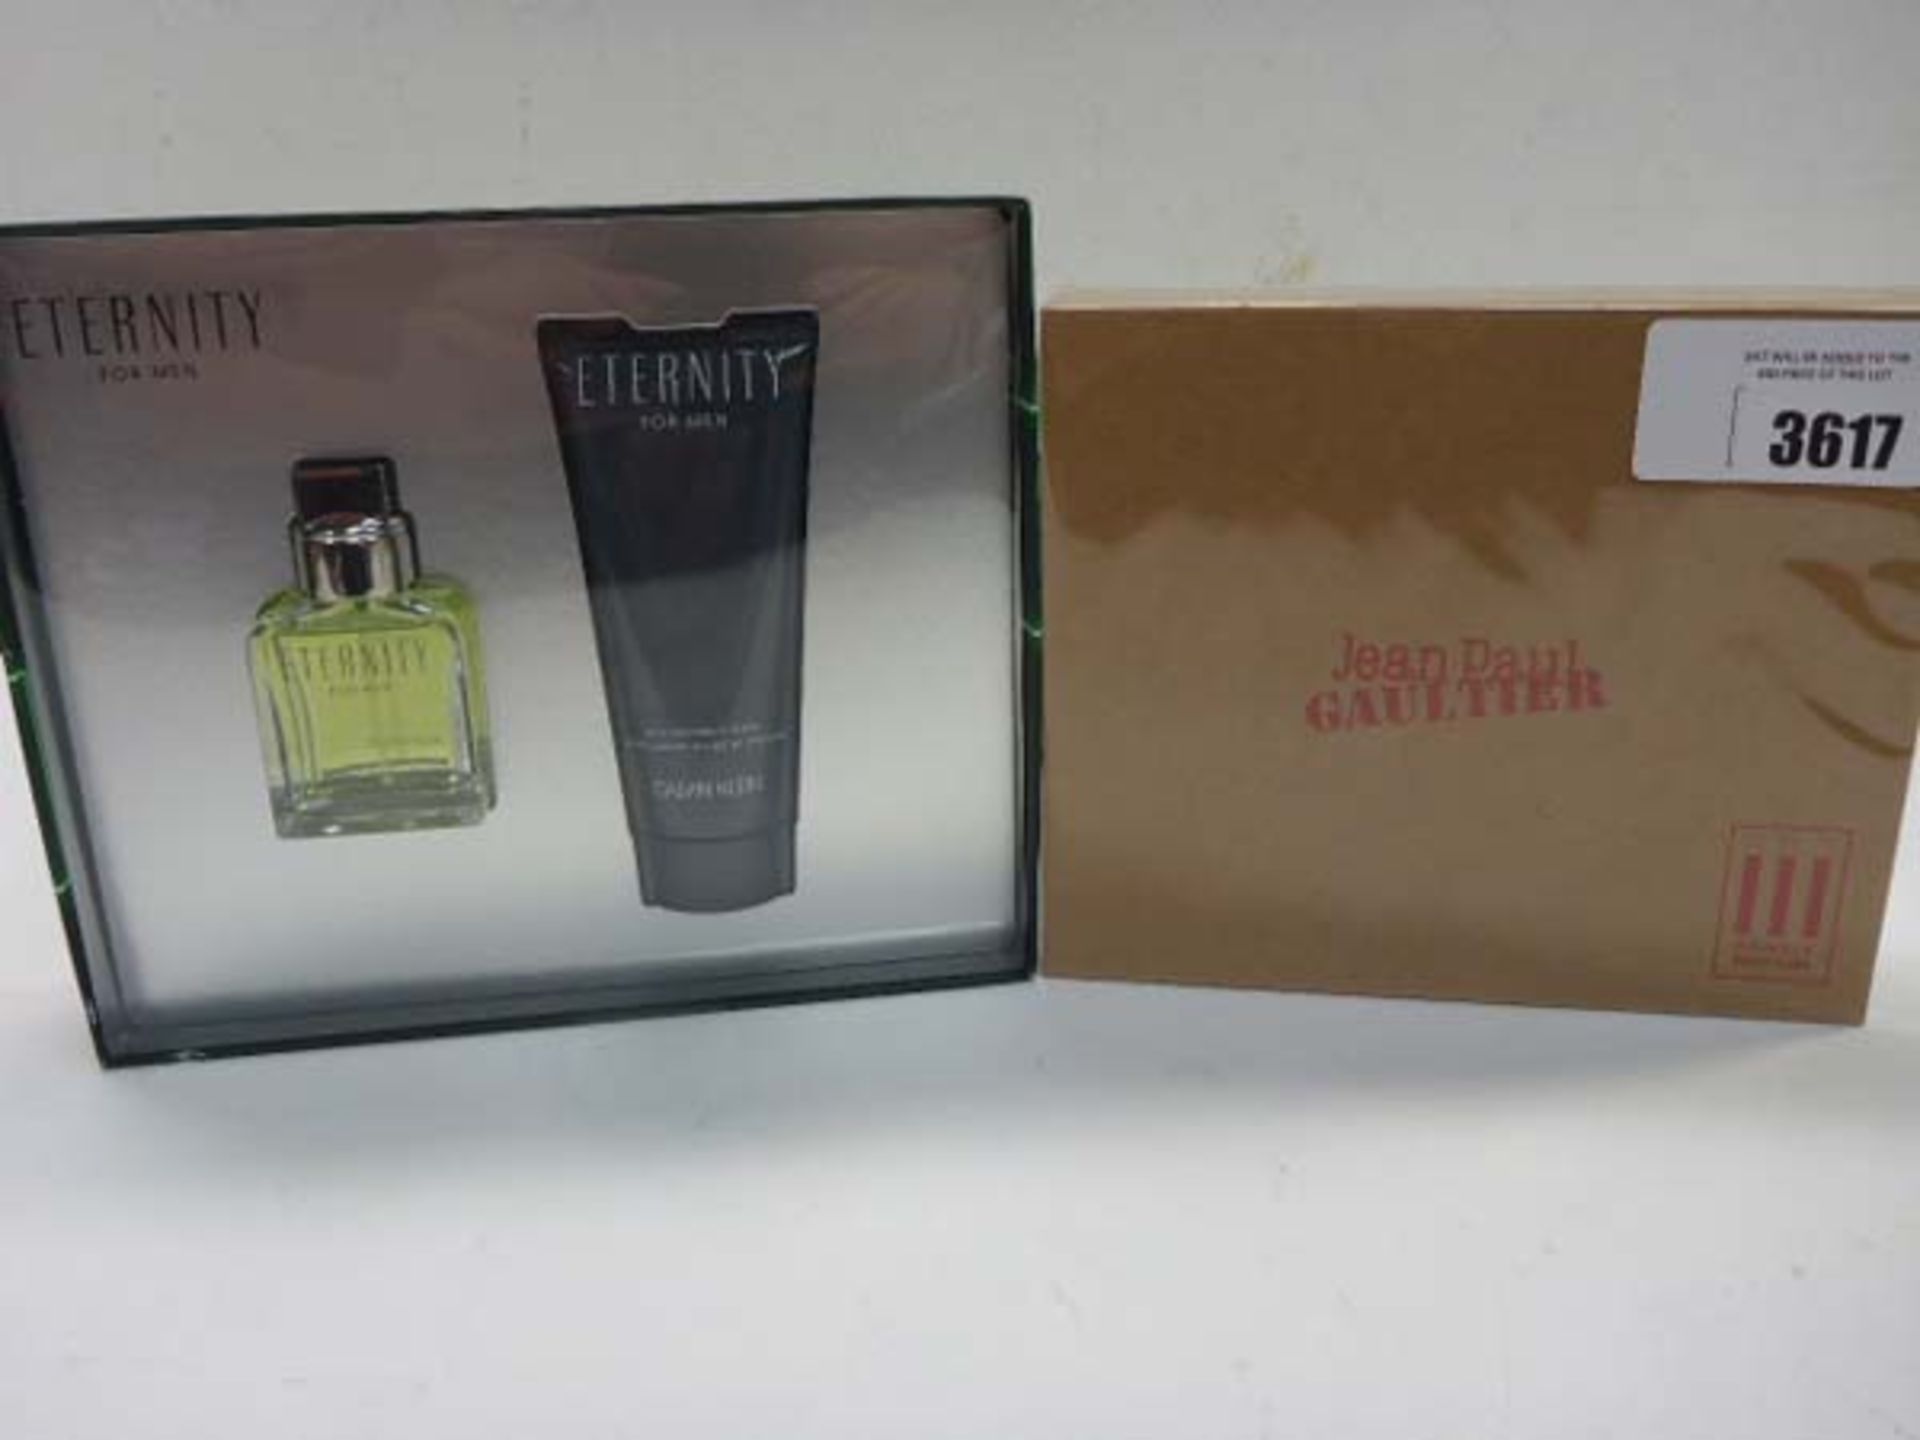 Jean Paul Gaultier 3 x 10ml fragrance gift set and Calvin Klein Eternity For Men 30ml eau de